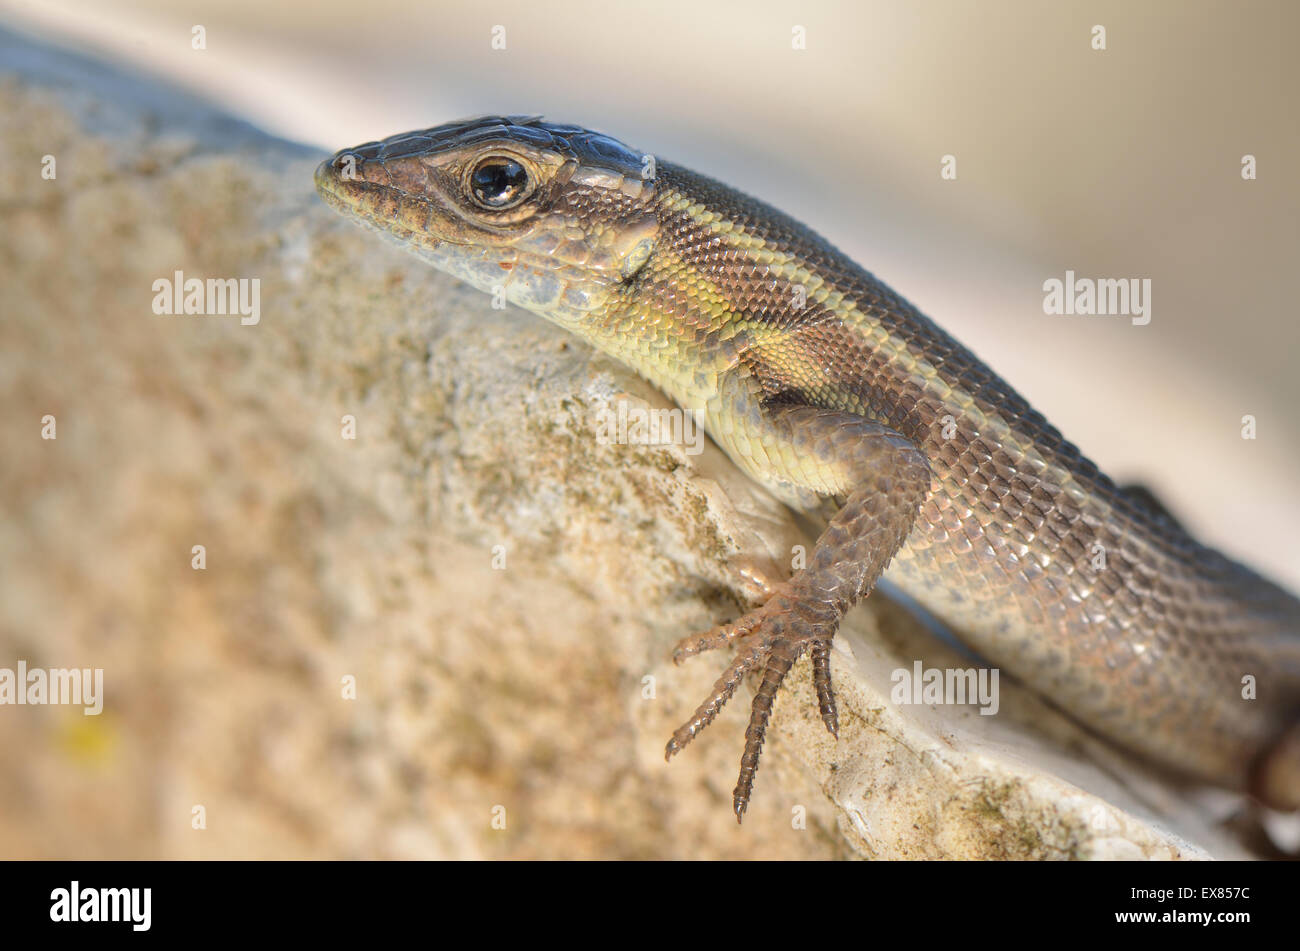 Adult snake-eyed lizard (Ophisops elegans macrodactylus) basking on rock, portrait, Lycia, Southwest Turkey Stock Photo